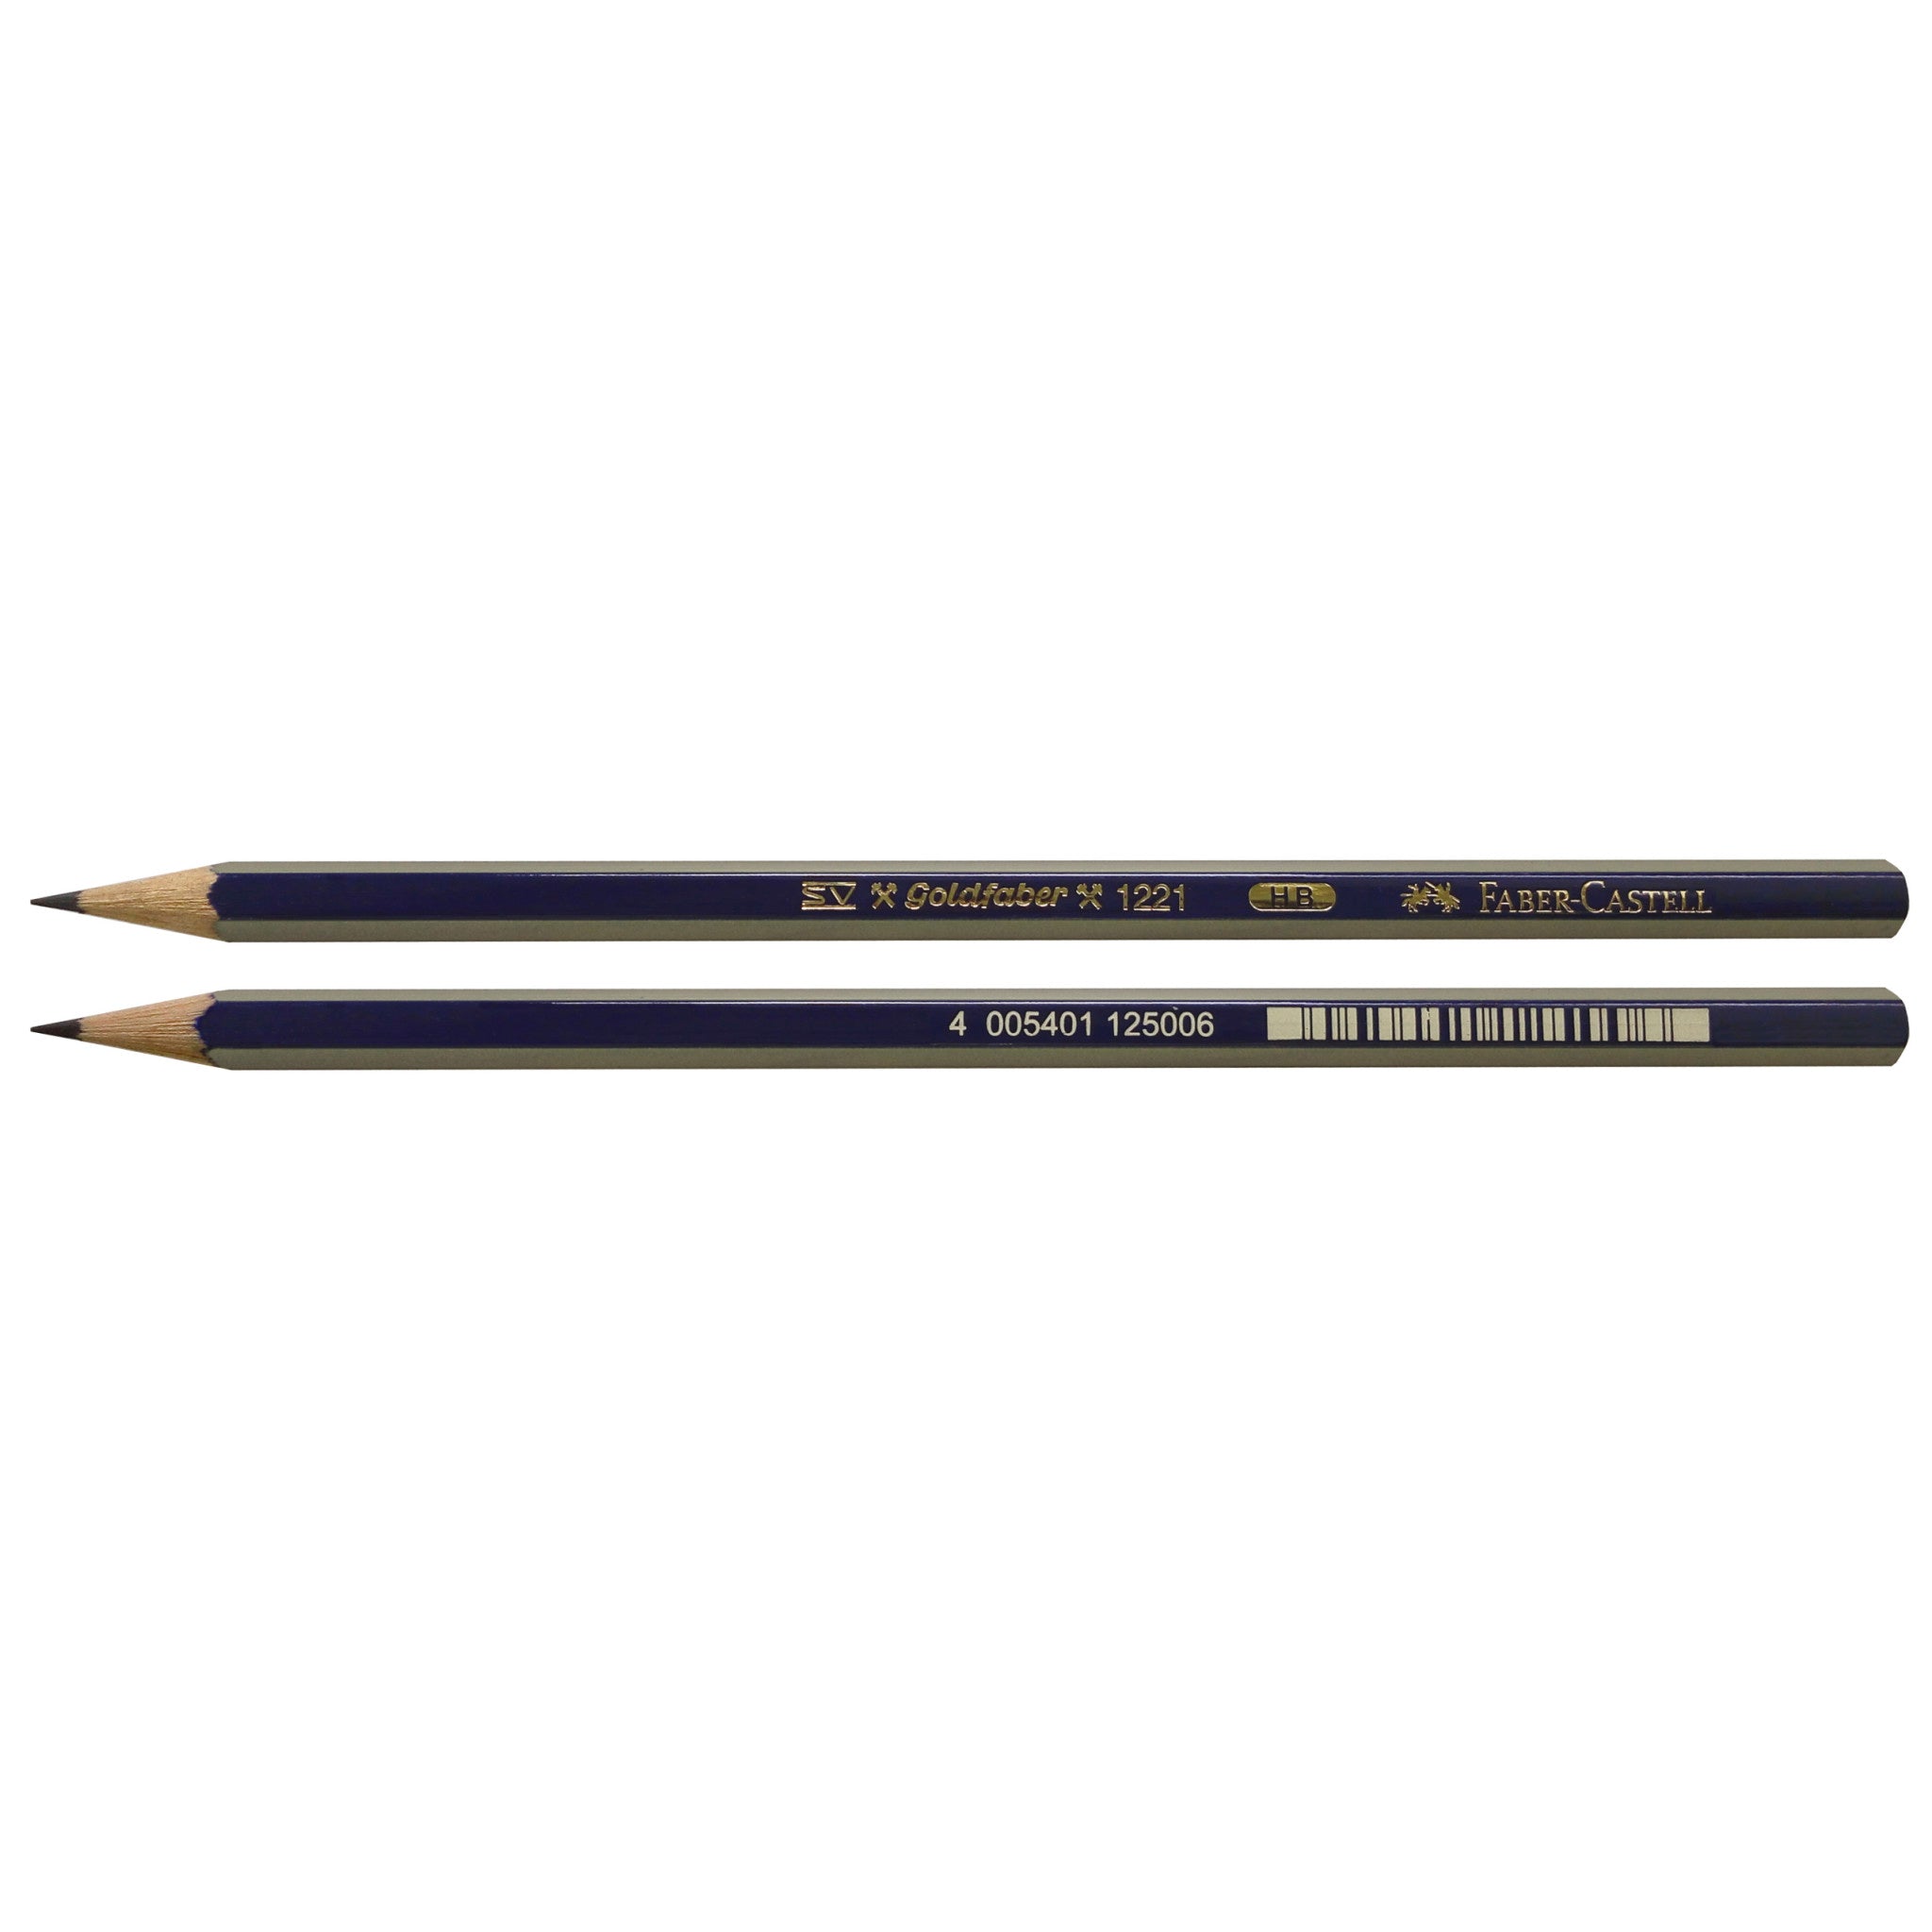 Faber Castell 16pcs Drawing Pencil 8b 7b 6b 5b 4b 3b 2b B Hb F H 2h 3h 4h  5h 6h Standard Pencils For School Sketch Pencil Set - Wooden Lead Pencils -  AliExpress